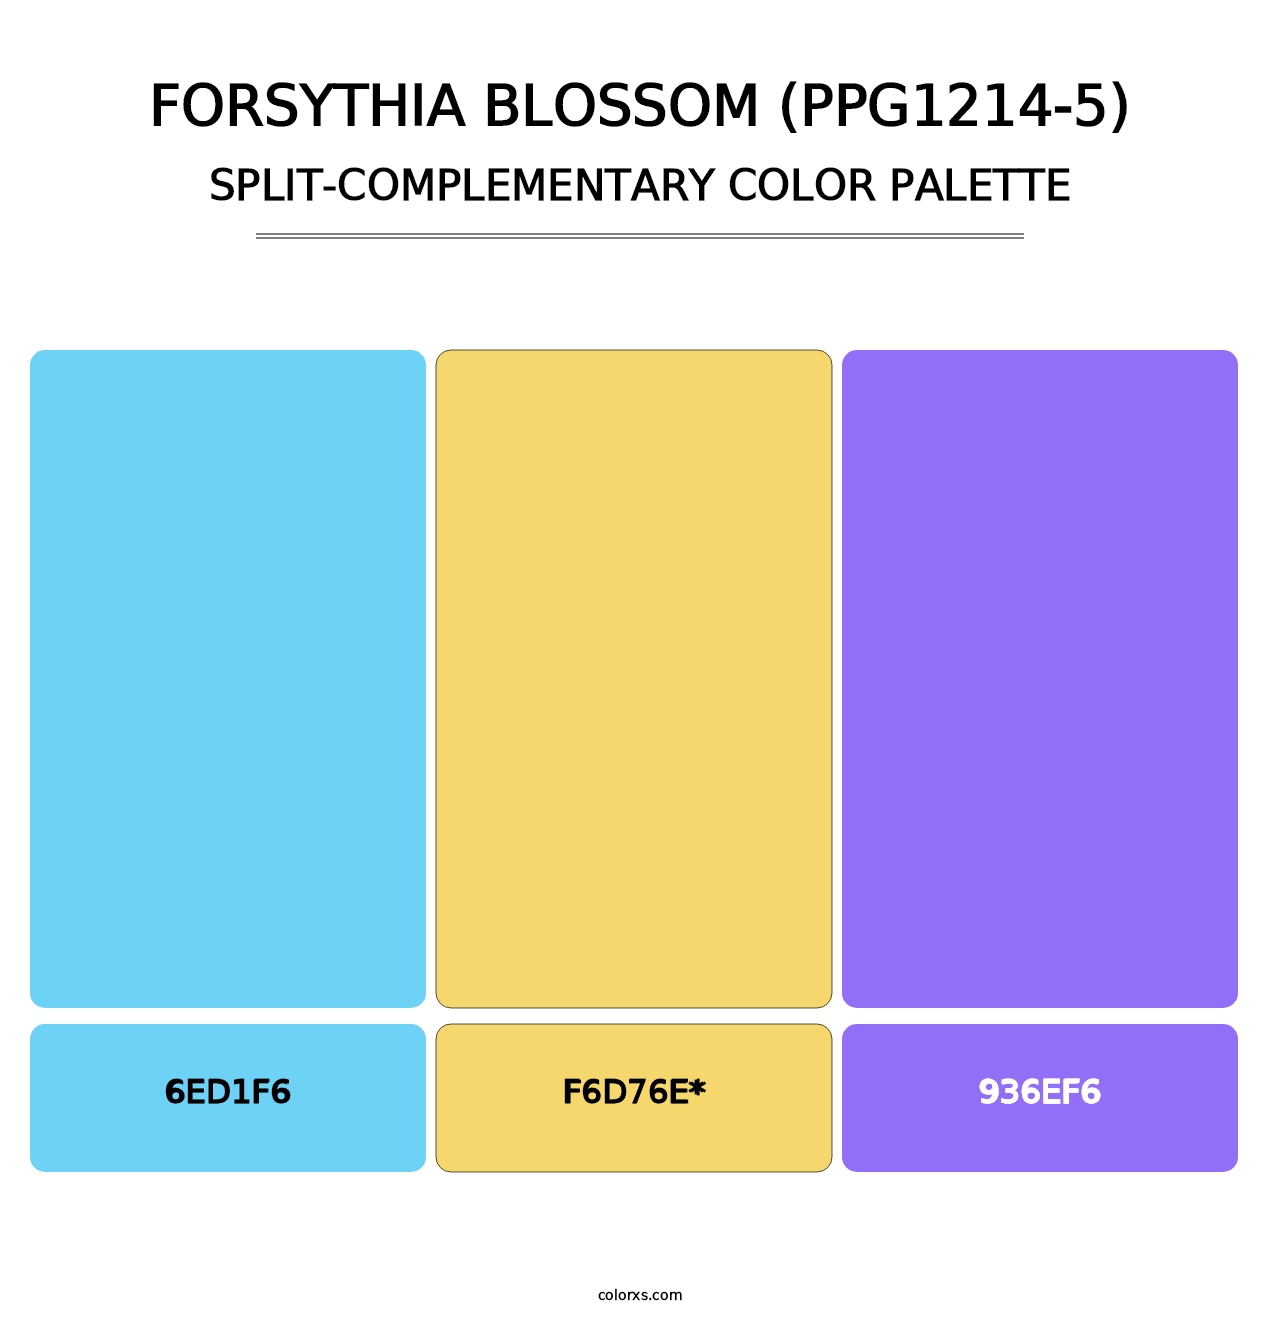 Forsythia Blossom (PPG1214-5) - Split-Complementary Color Palette